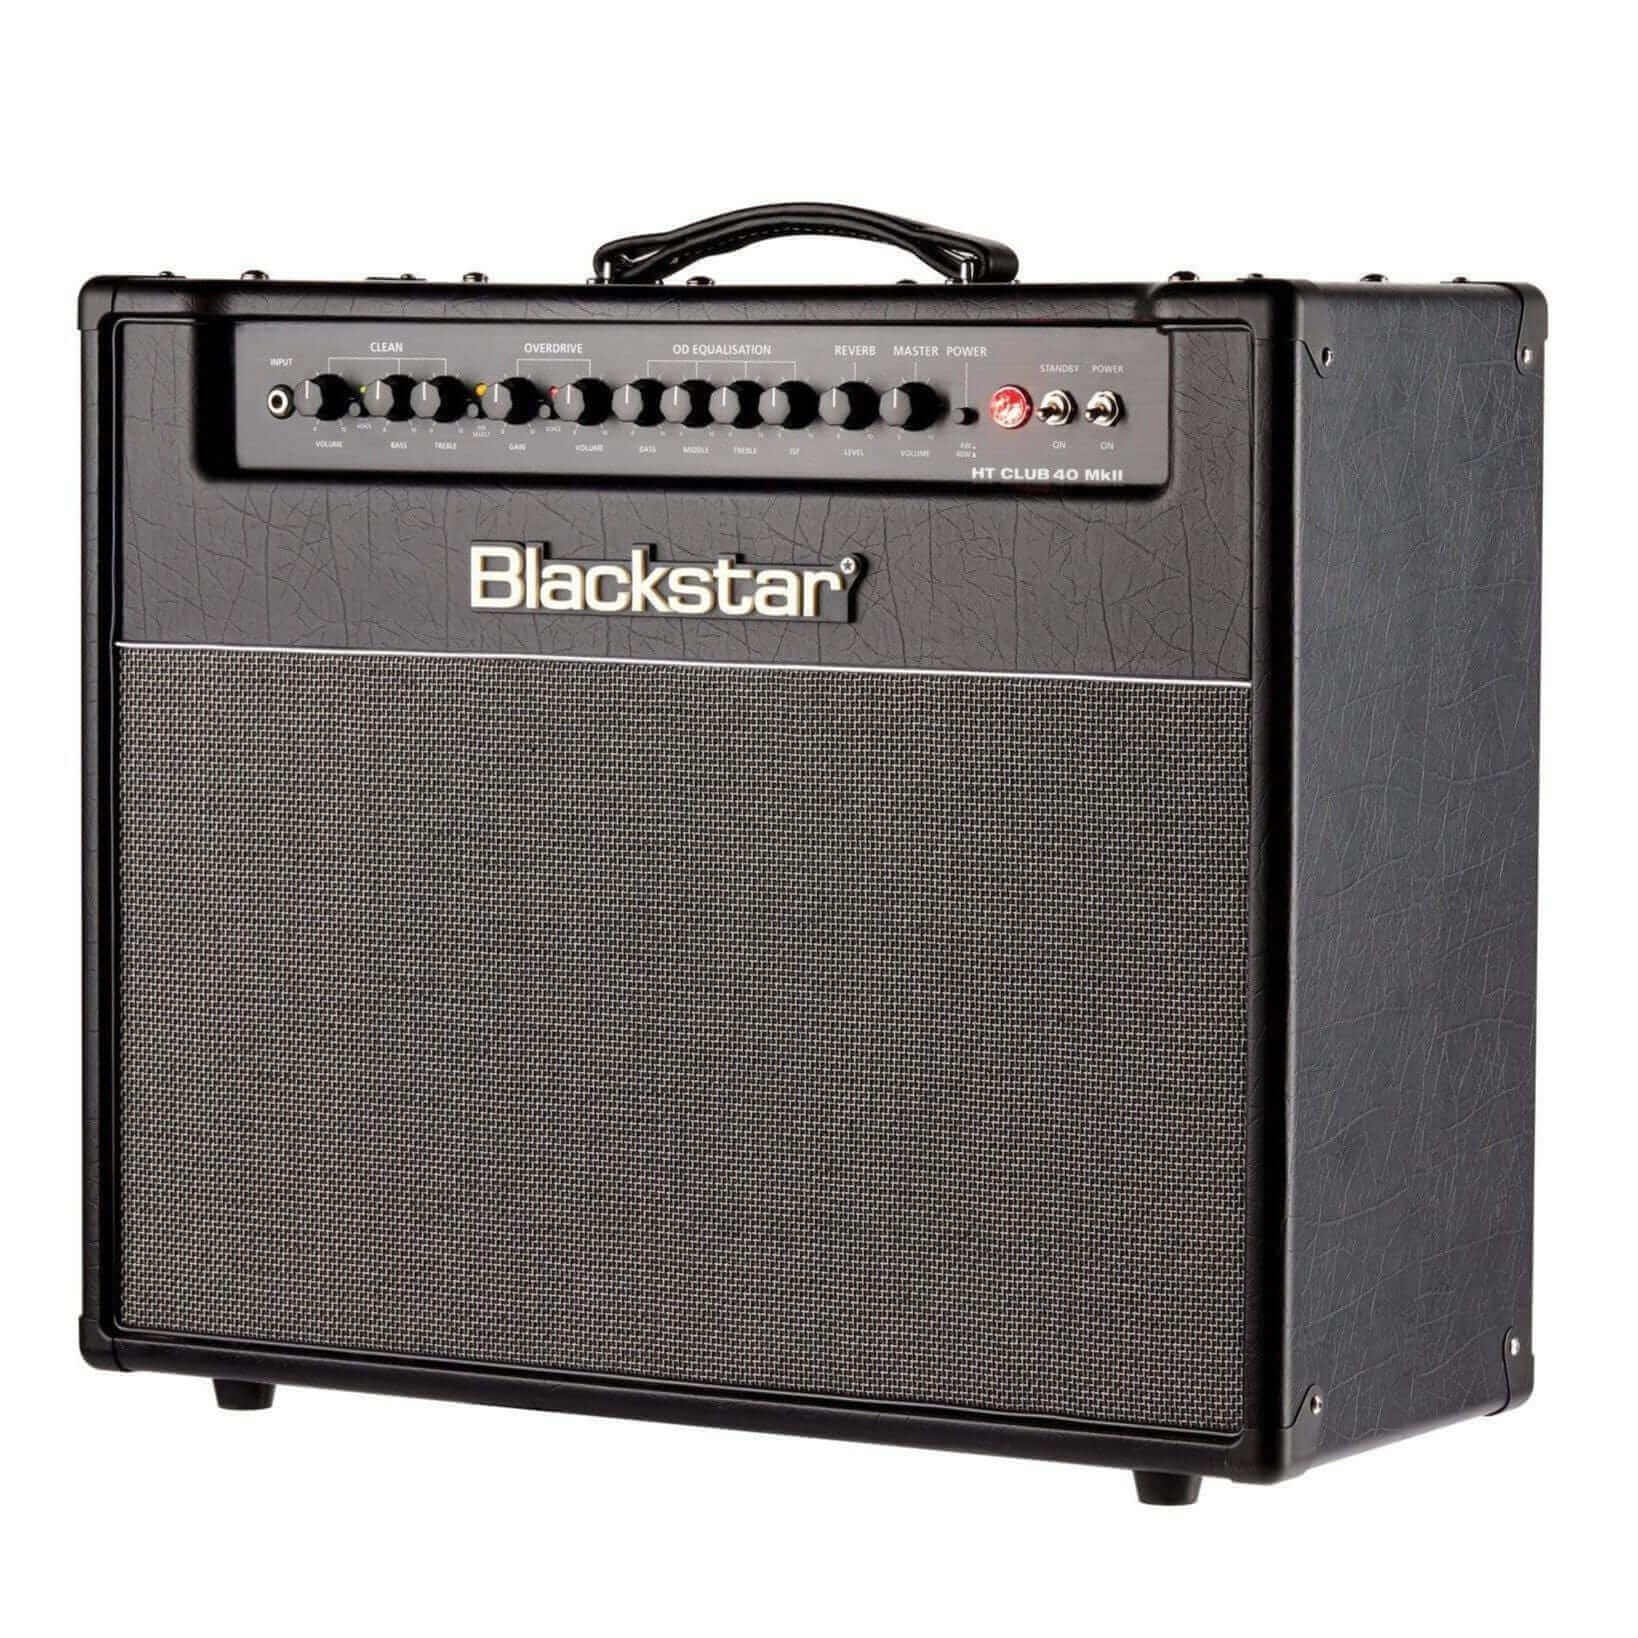 Blackstar Electric Guitar Blackstar HT Club 40 MKII